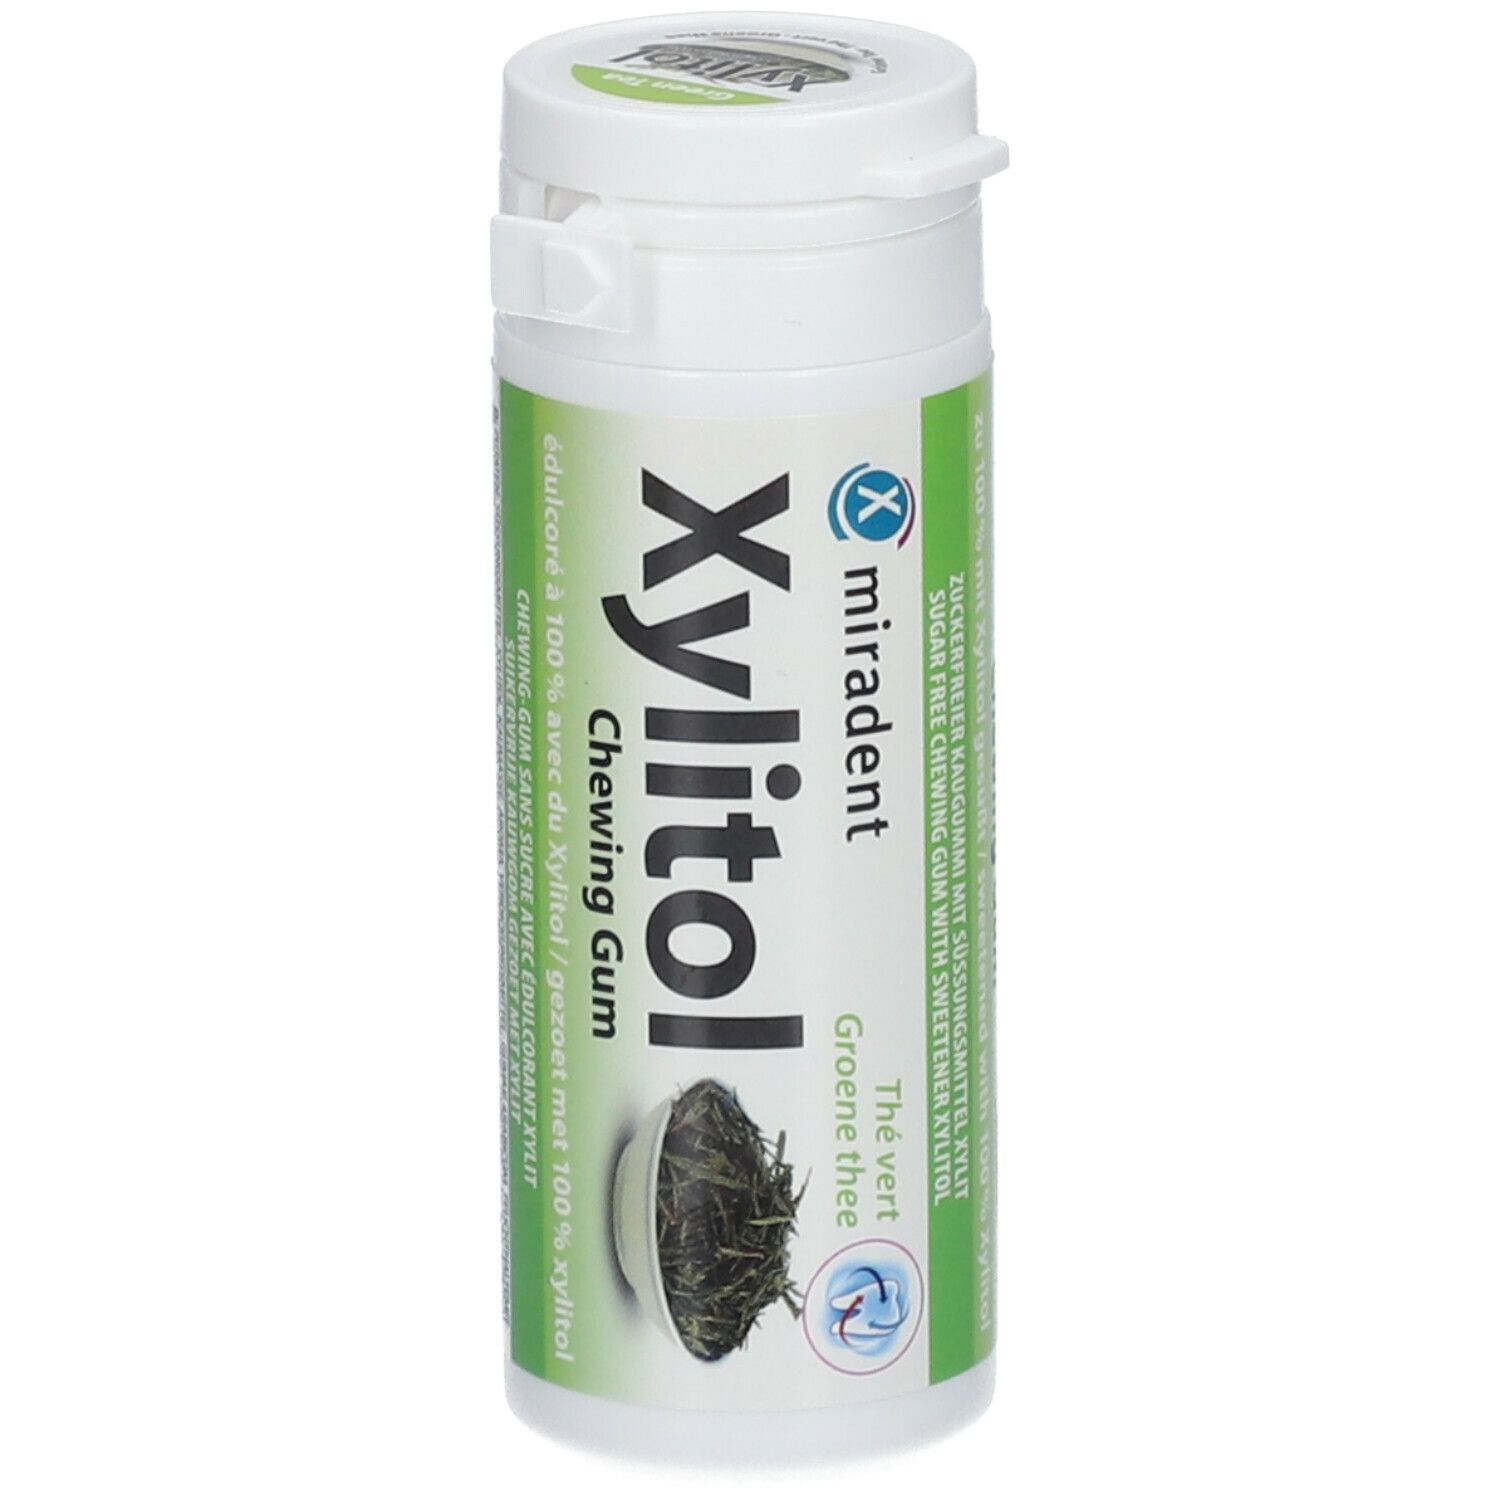 miradent Xylitol Chewing Gum Green Tea